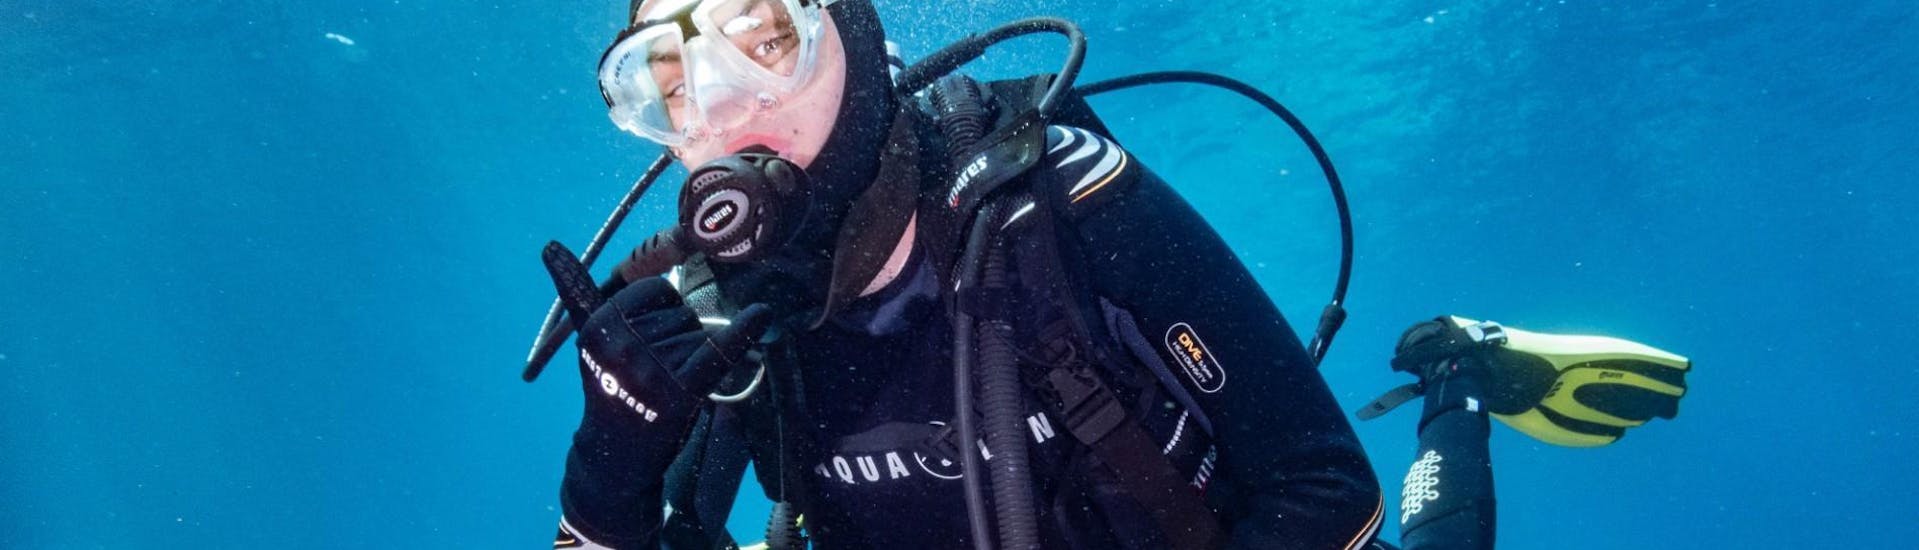 A participant scuba diving in Santa Pola during a tour offered by Dive Academy Santa Pola.